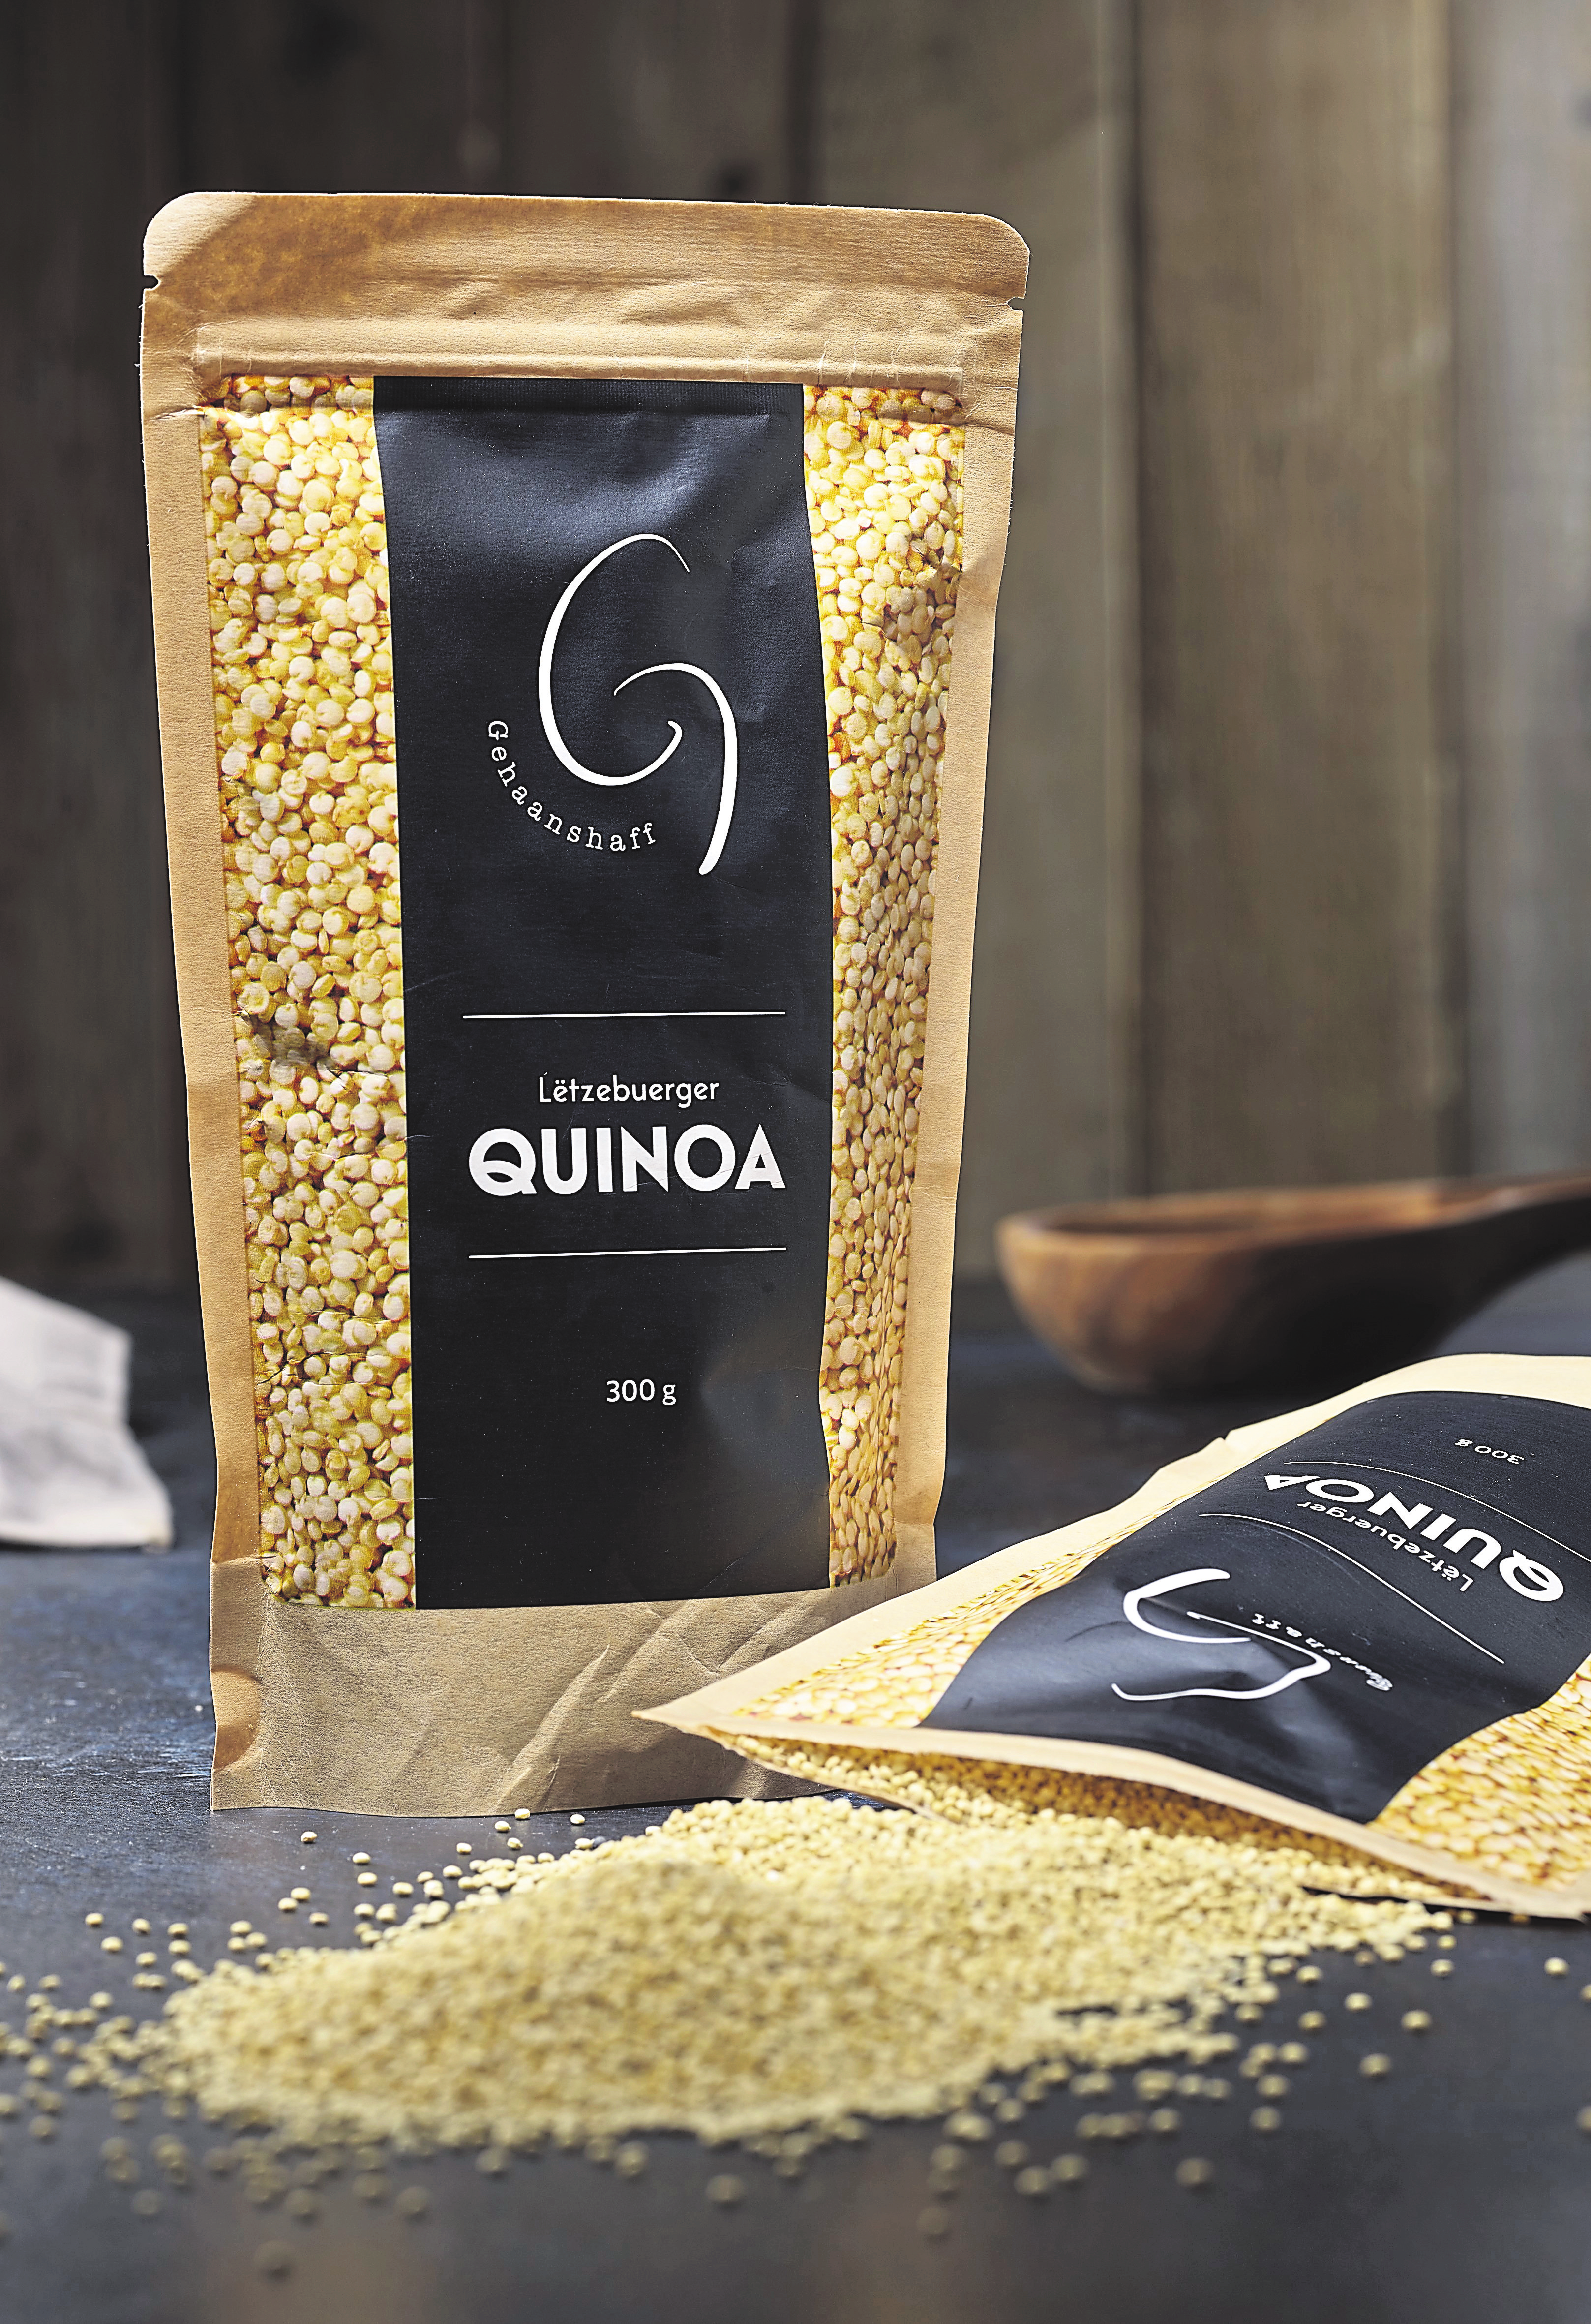 Die Quinoa vom Gehaanshaff in Bettemburg ist die erste in Luxemburg angebaute Quinoa überhaupt.